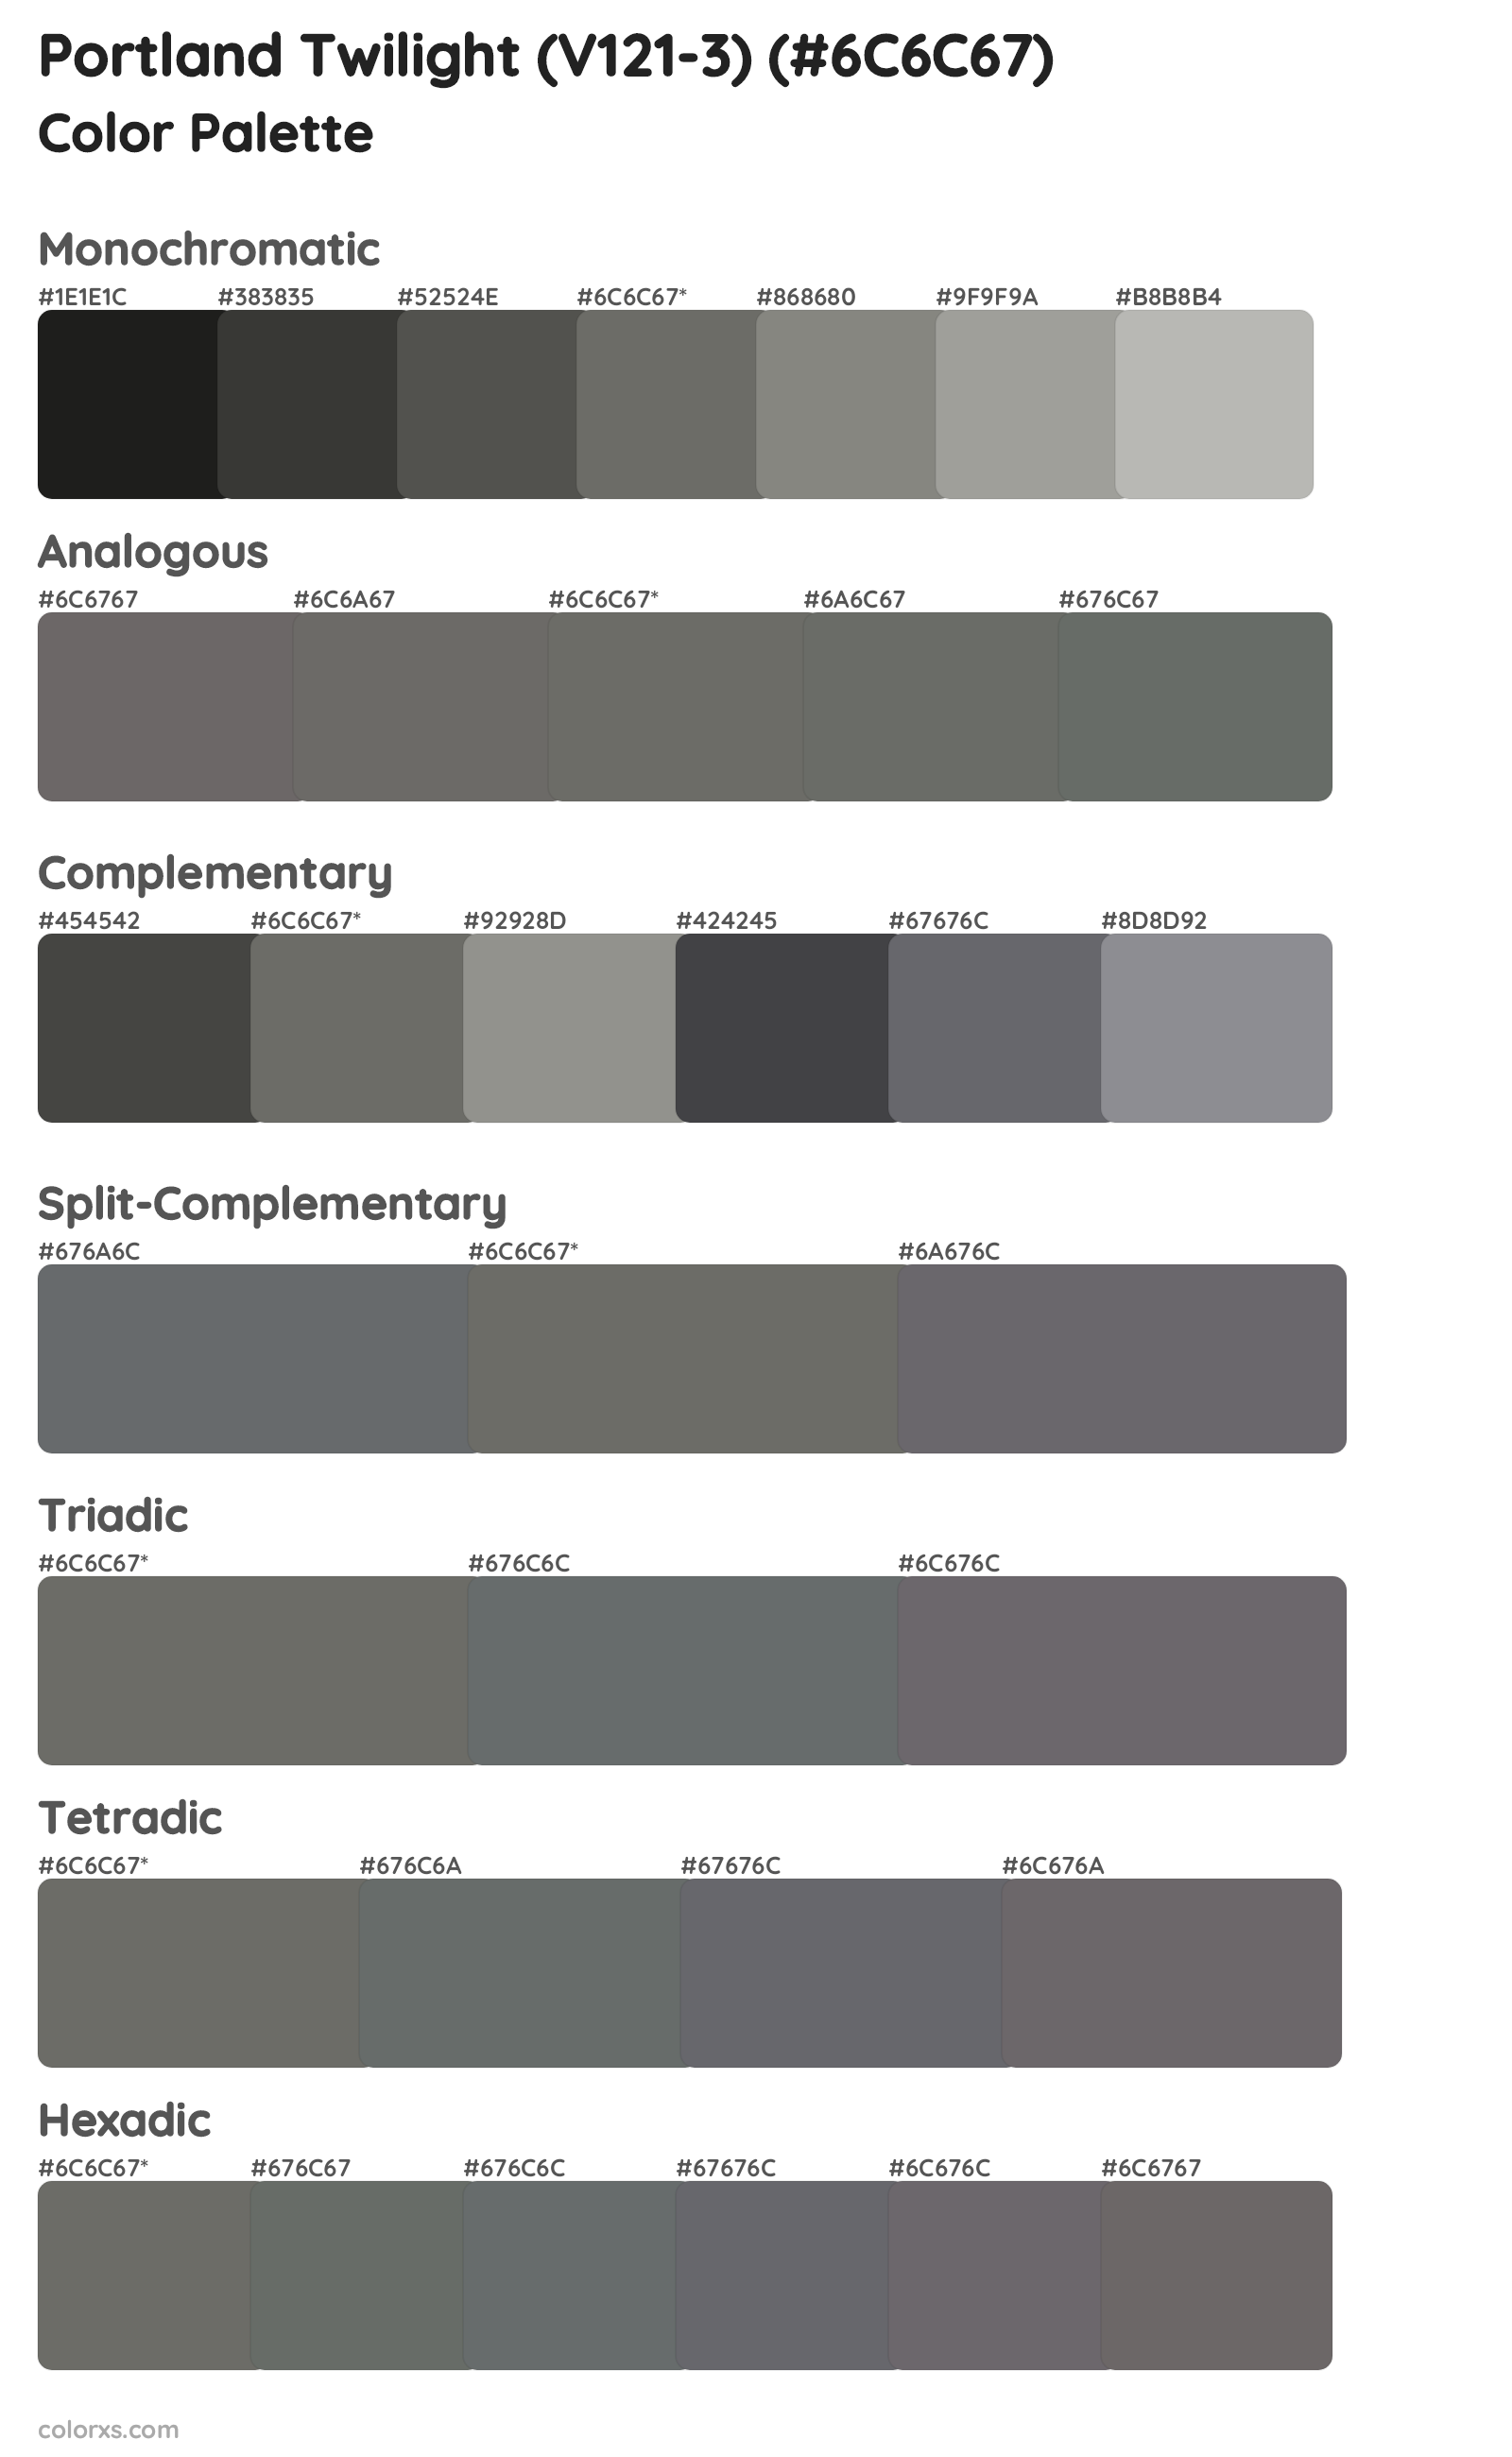 Portland Twilight (V121-3) Color Scheme Palettes